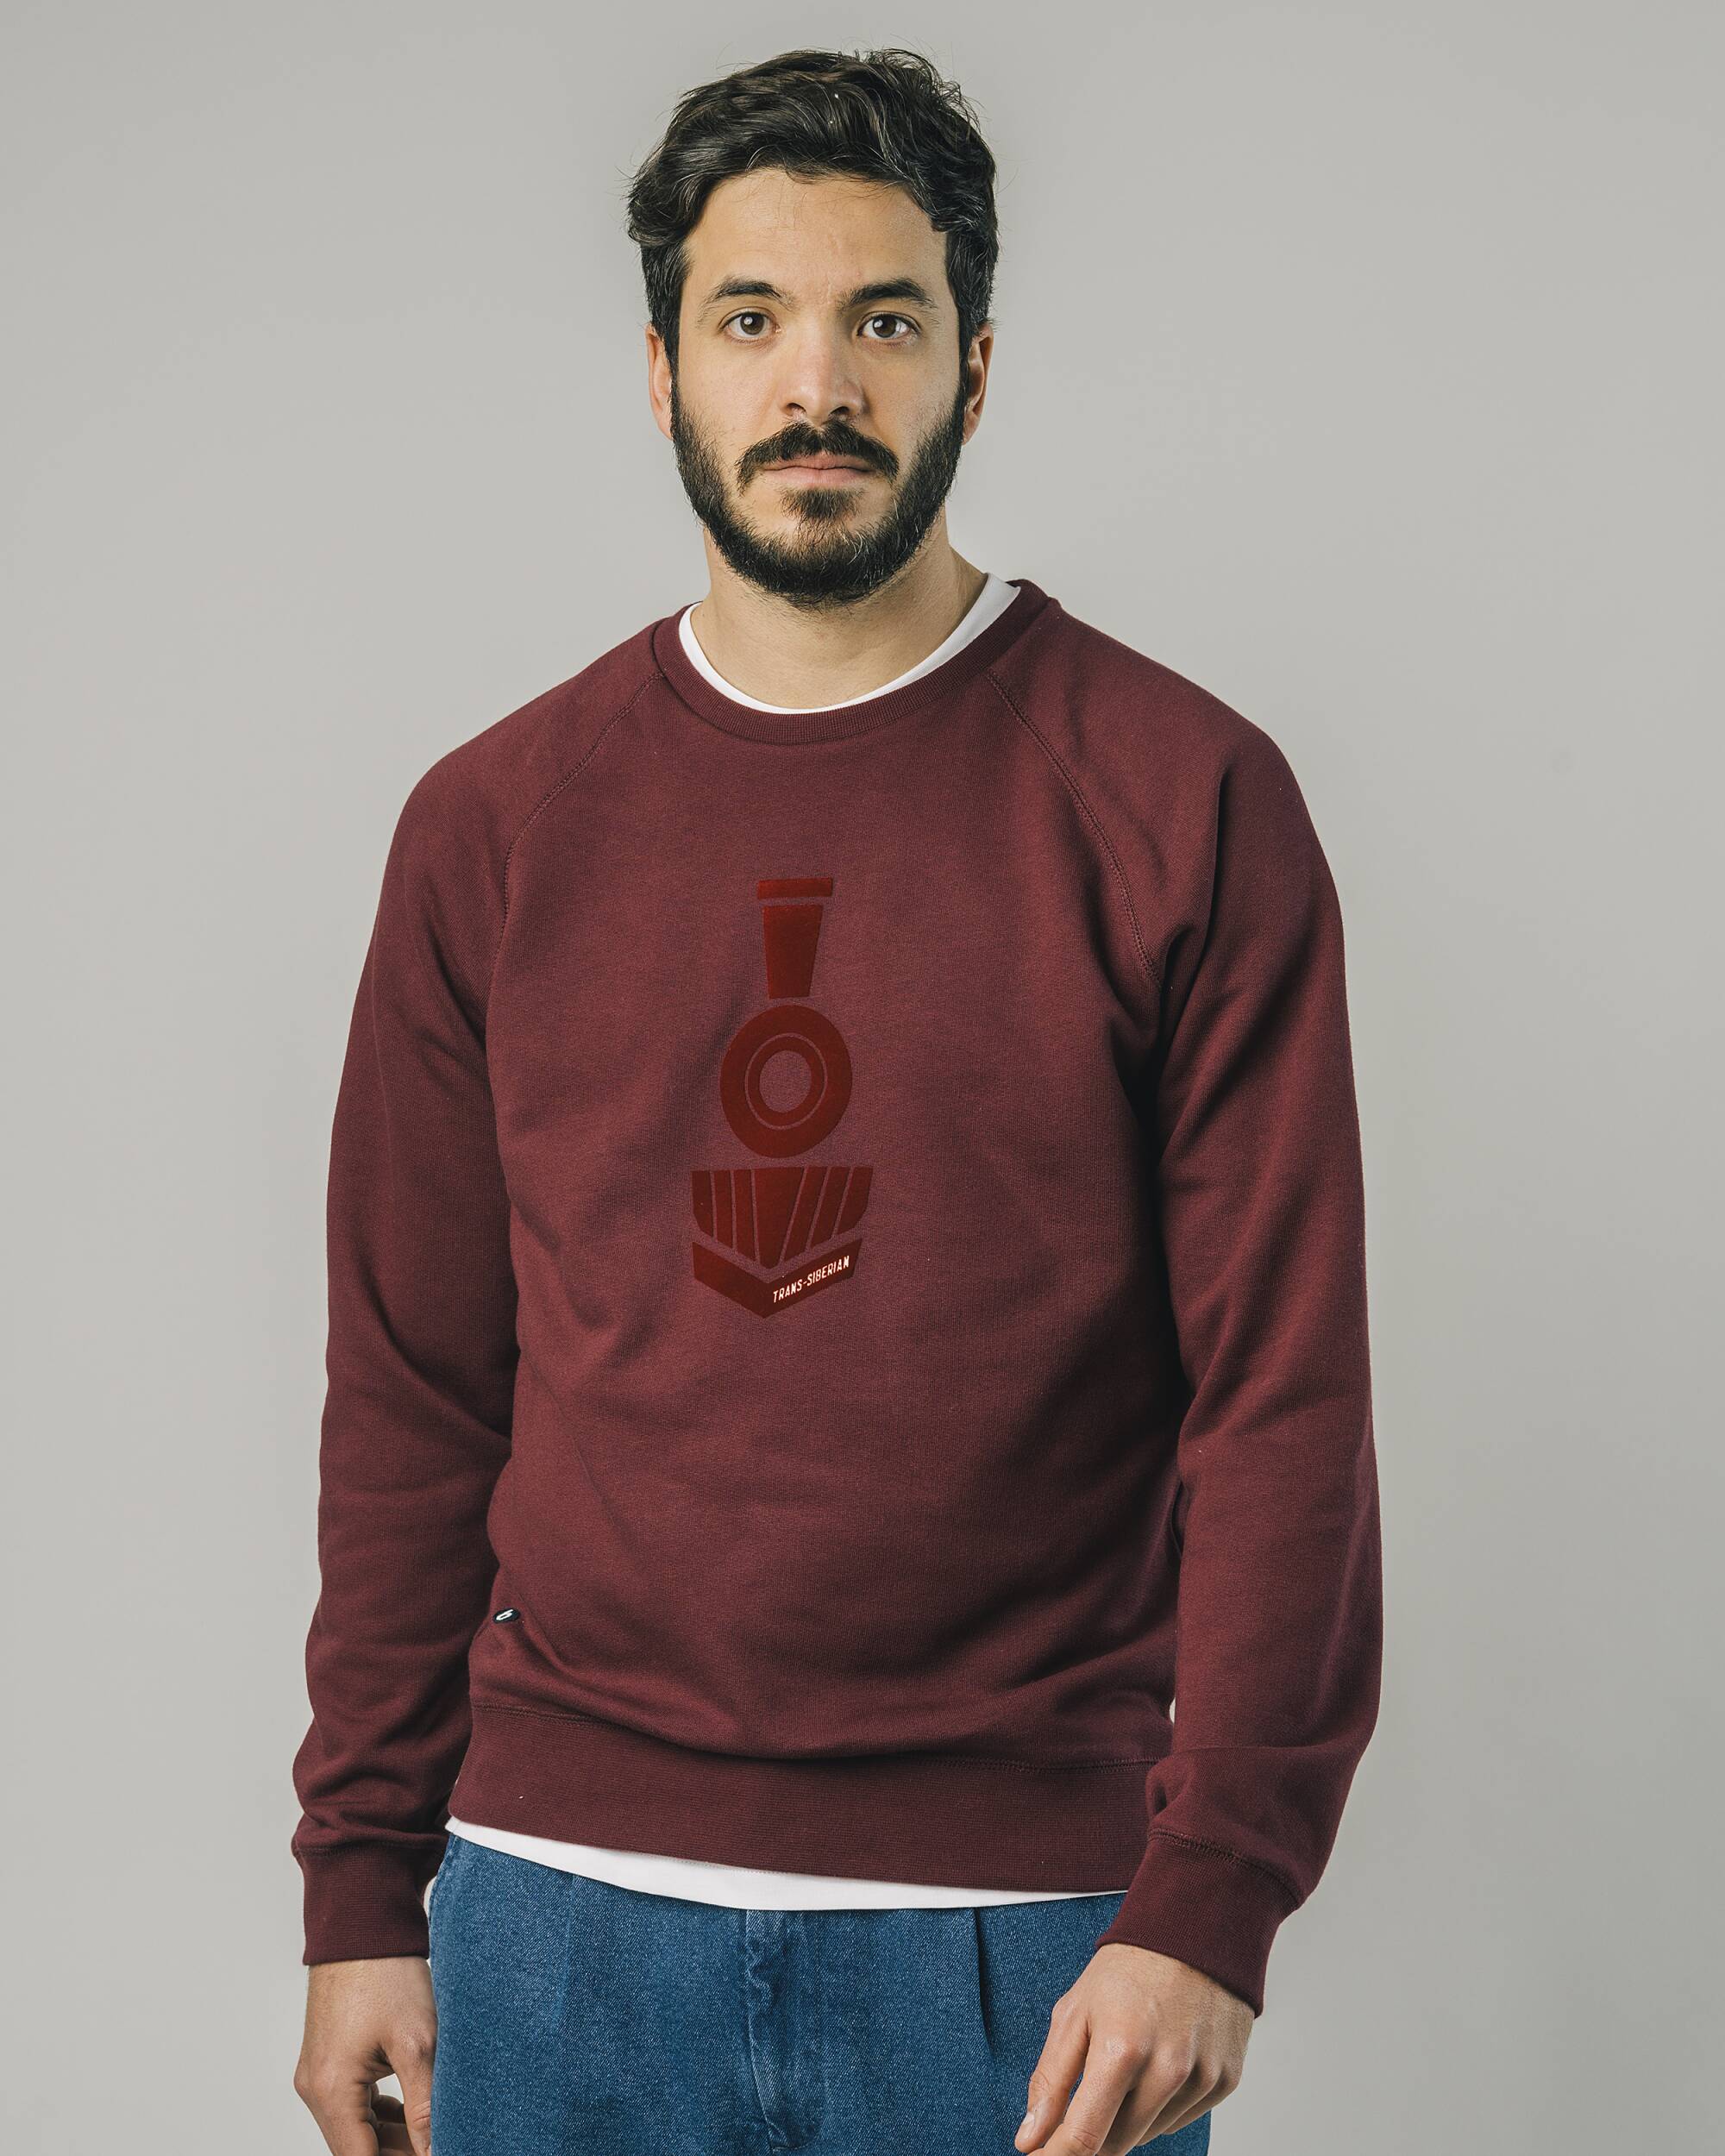 Sweatshirt "Locomotive" in Bordeaux - red made from 100% organic cotton from Brava Fabrics